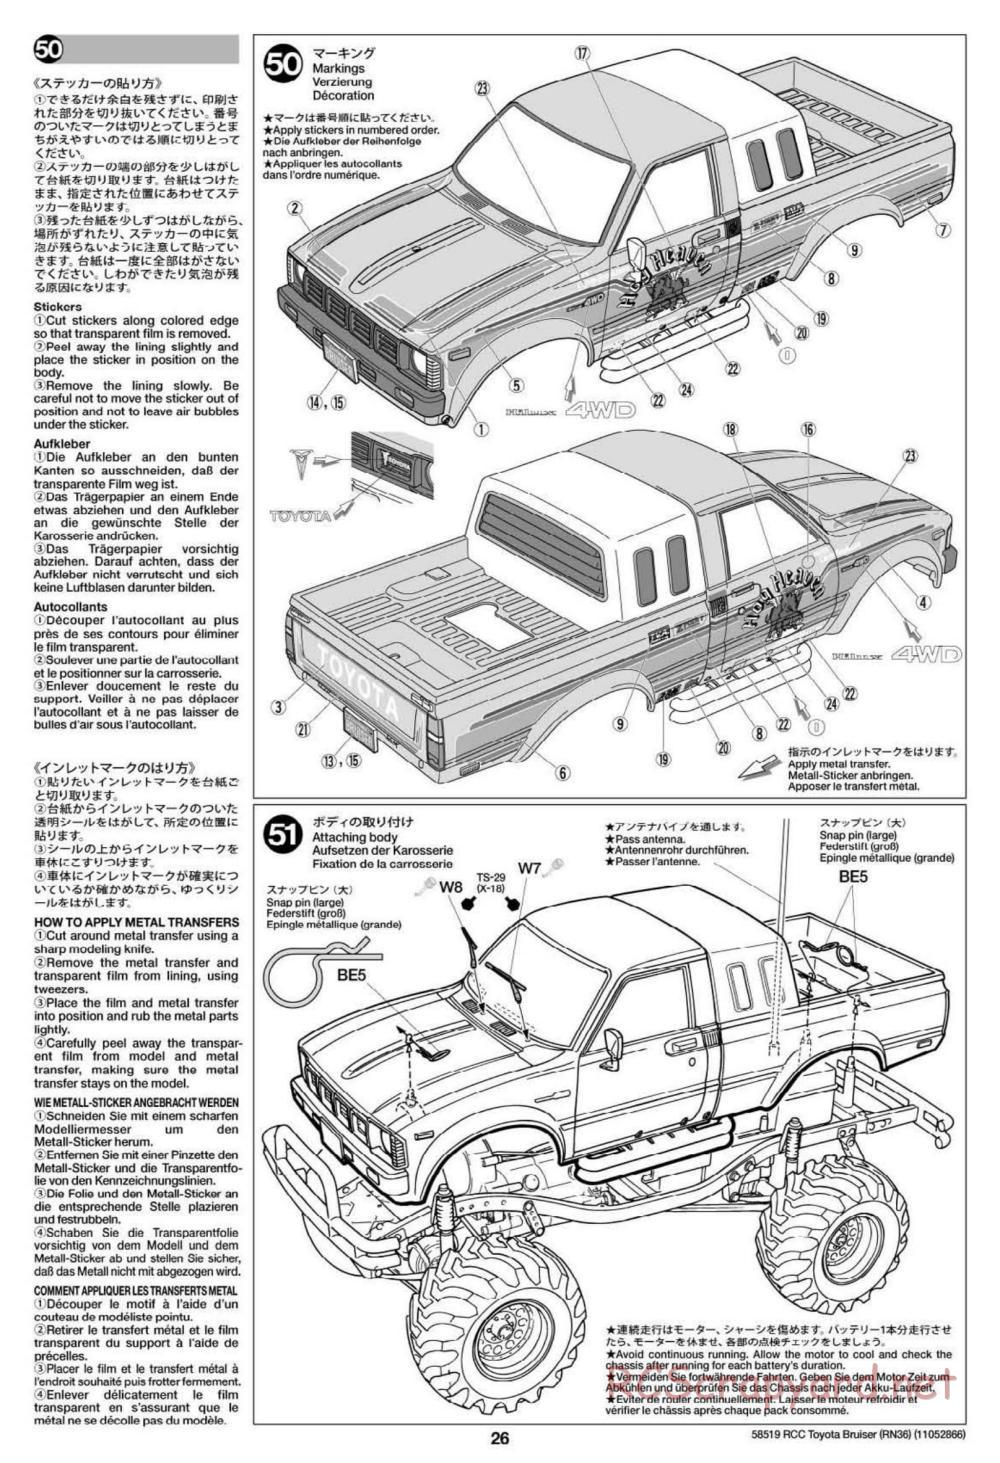 Tamiya - Toyota 4x4 Pick Up Bruiser Chassis - Manual - Page 26